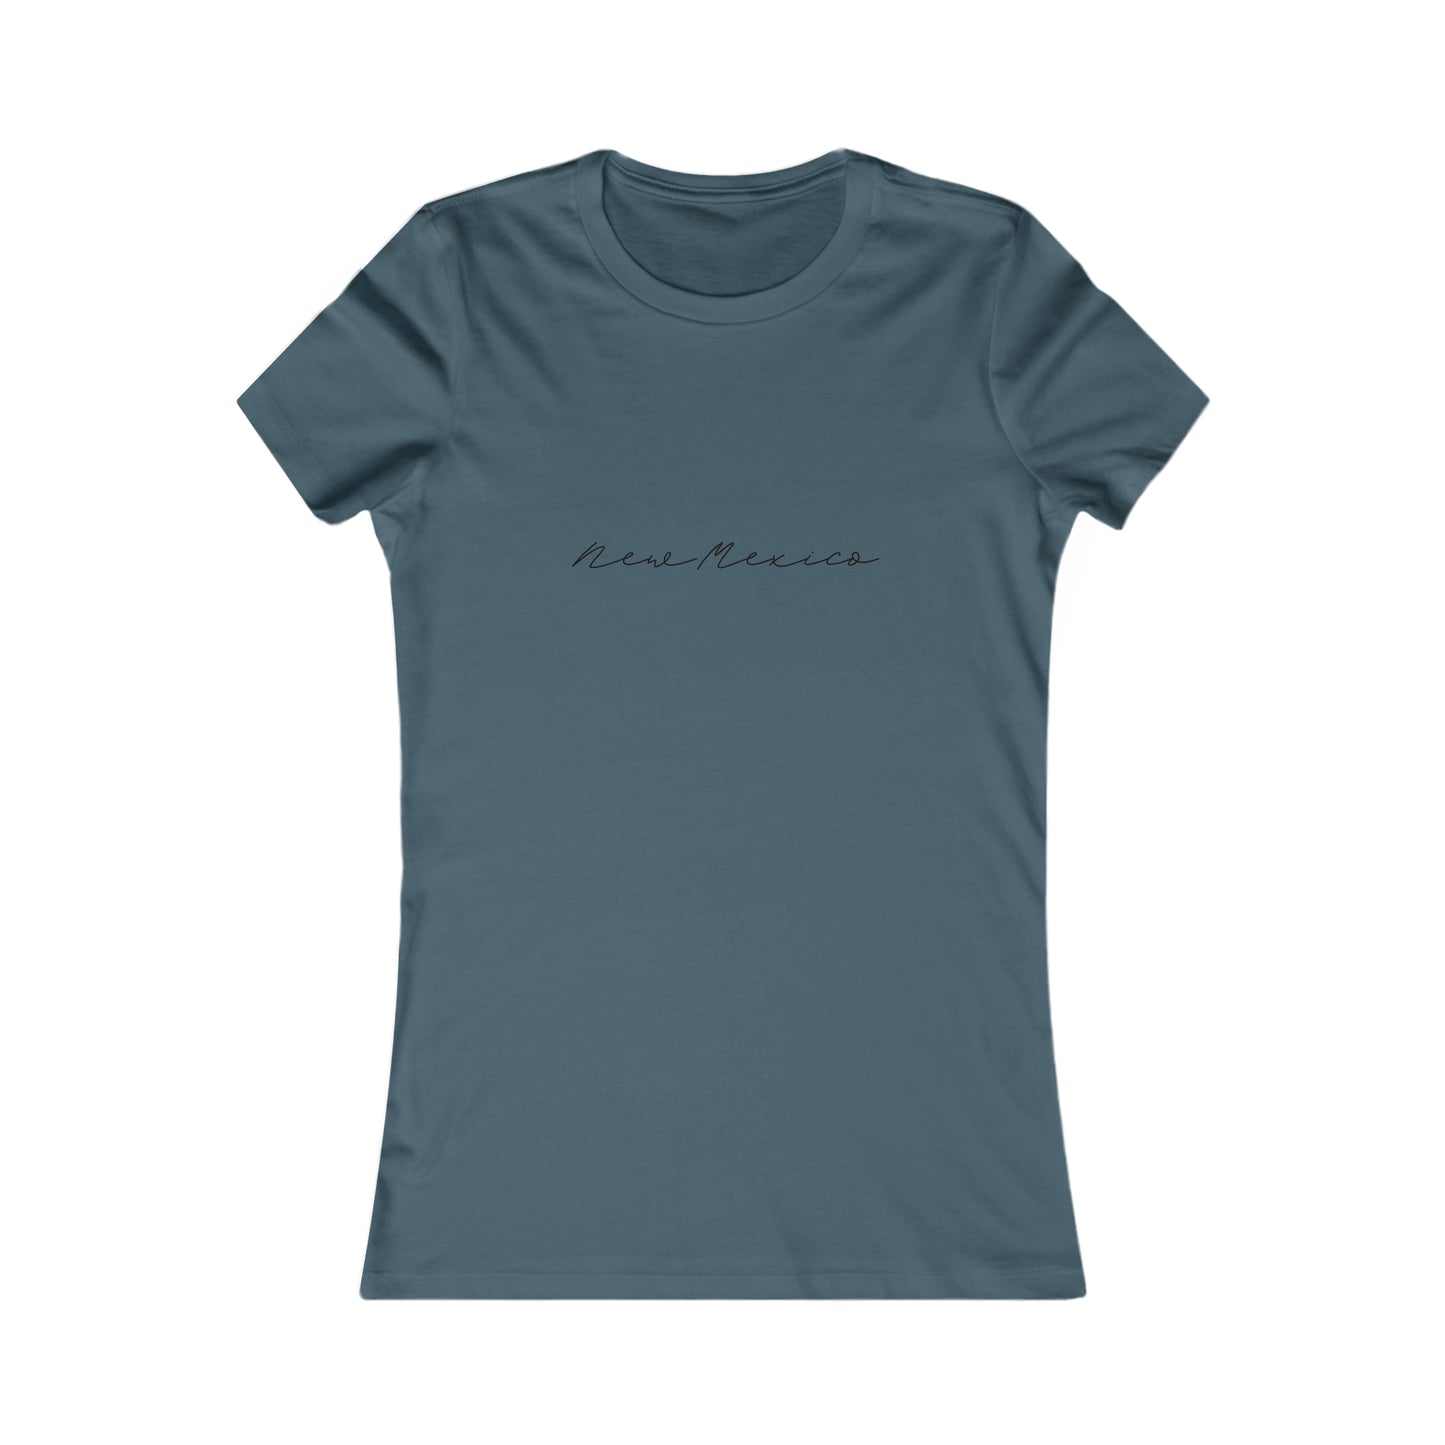 New Mexico Cursive Women's Shirt